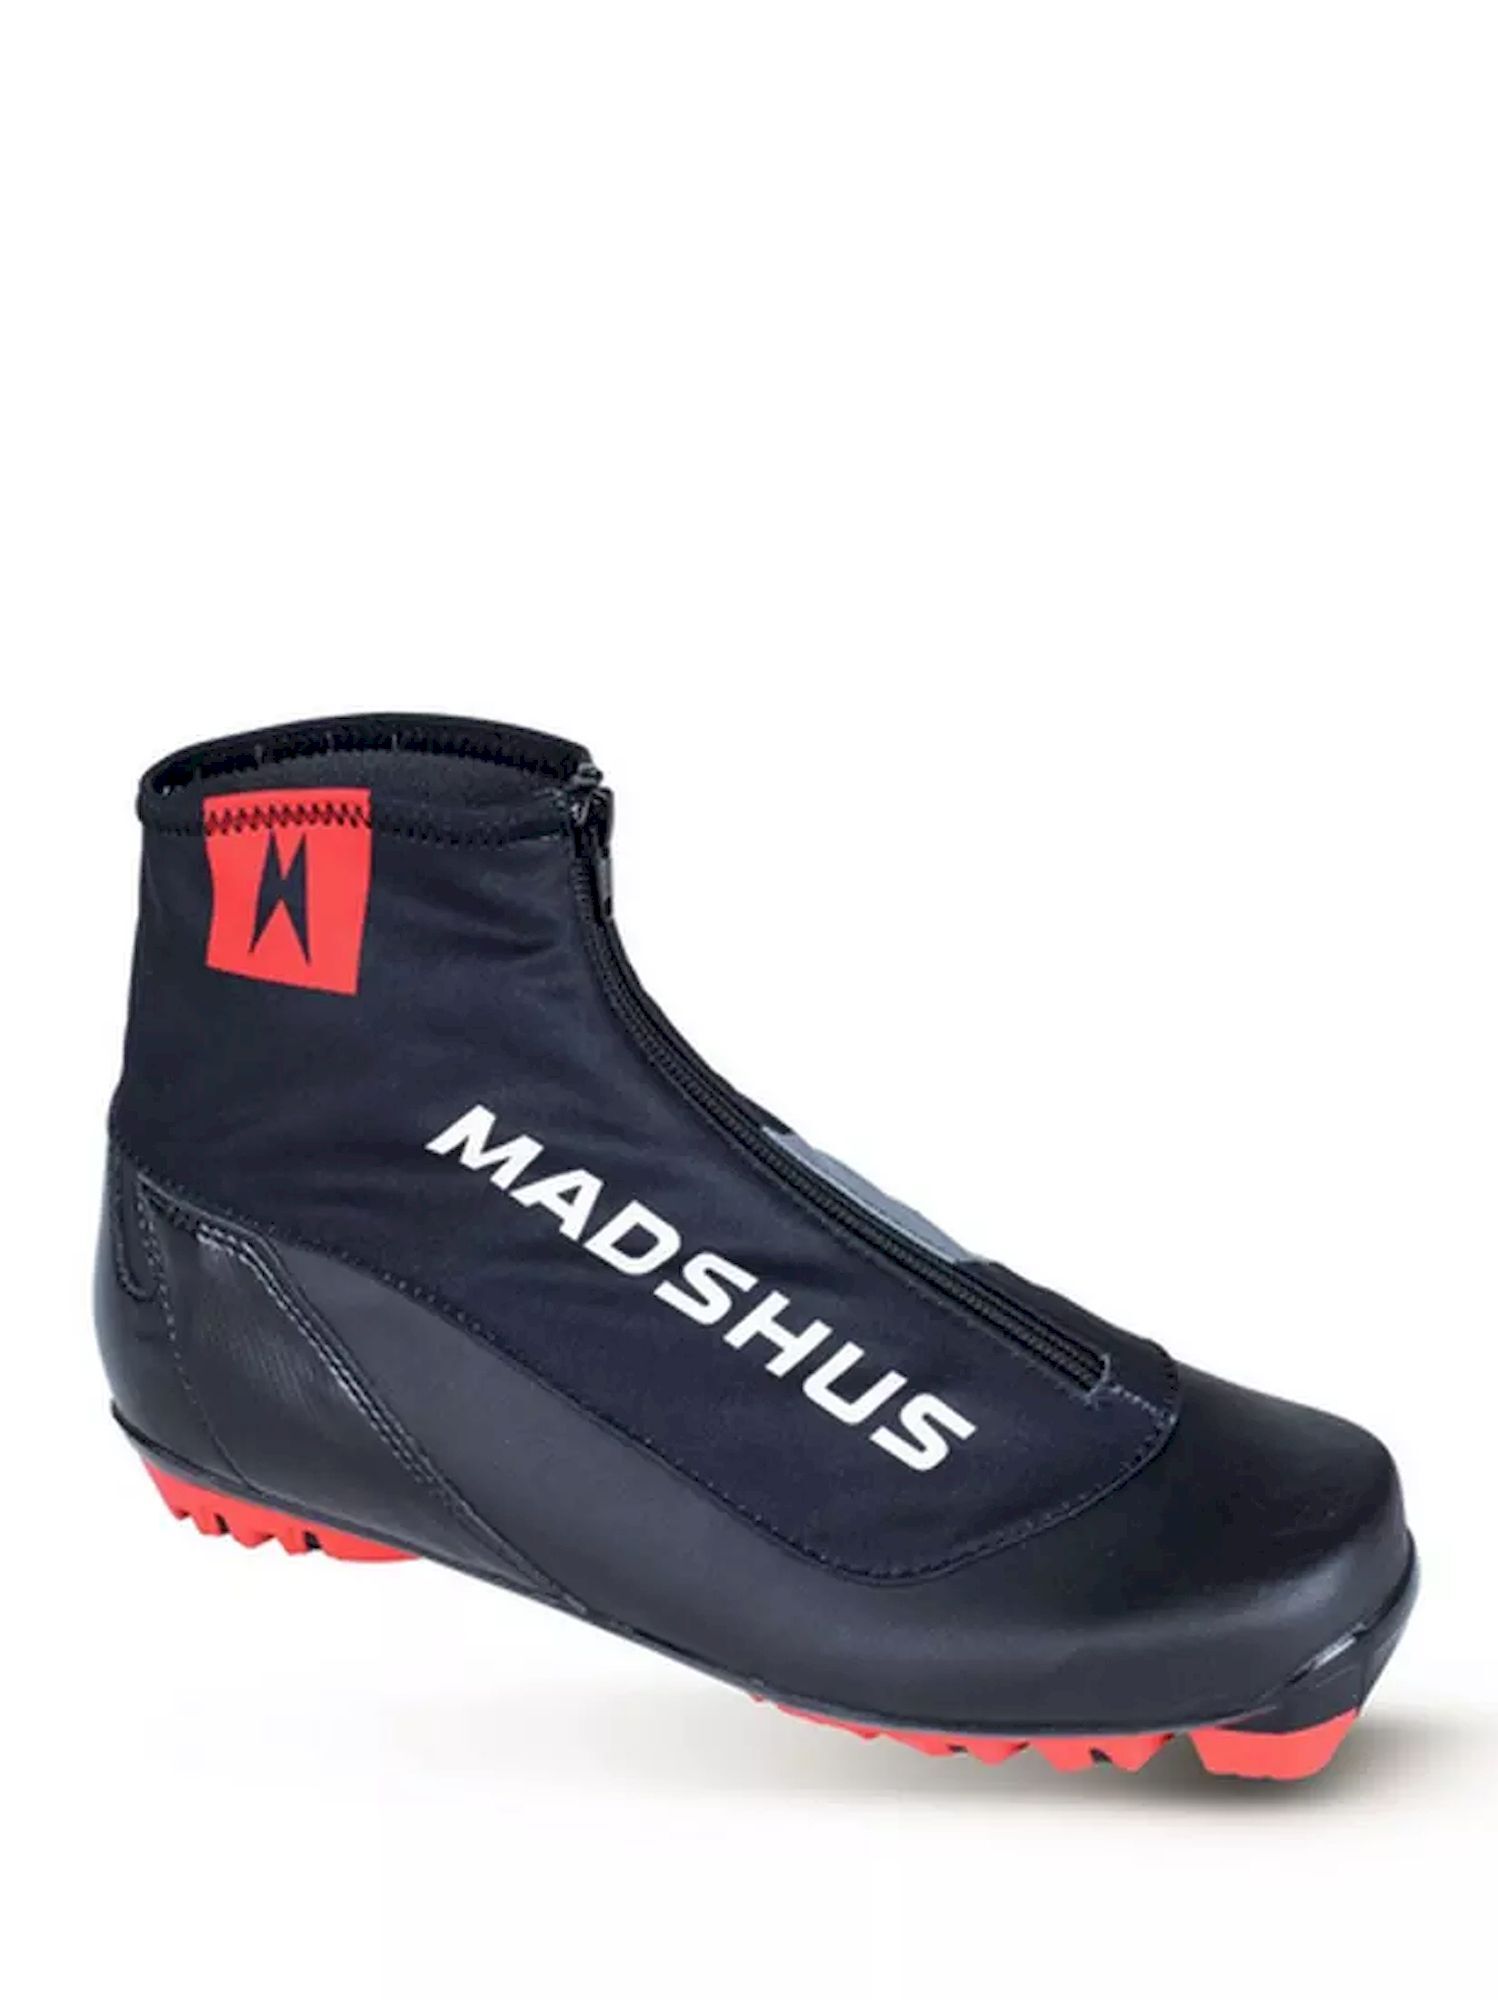 Madshus Endurace Classic - Buty do nart biegowych | Hardloop